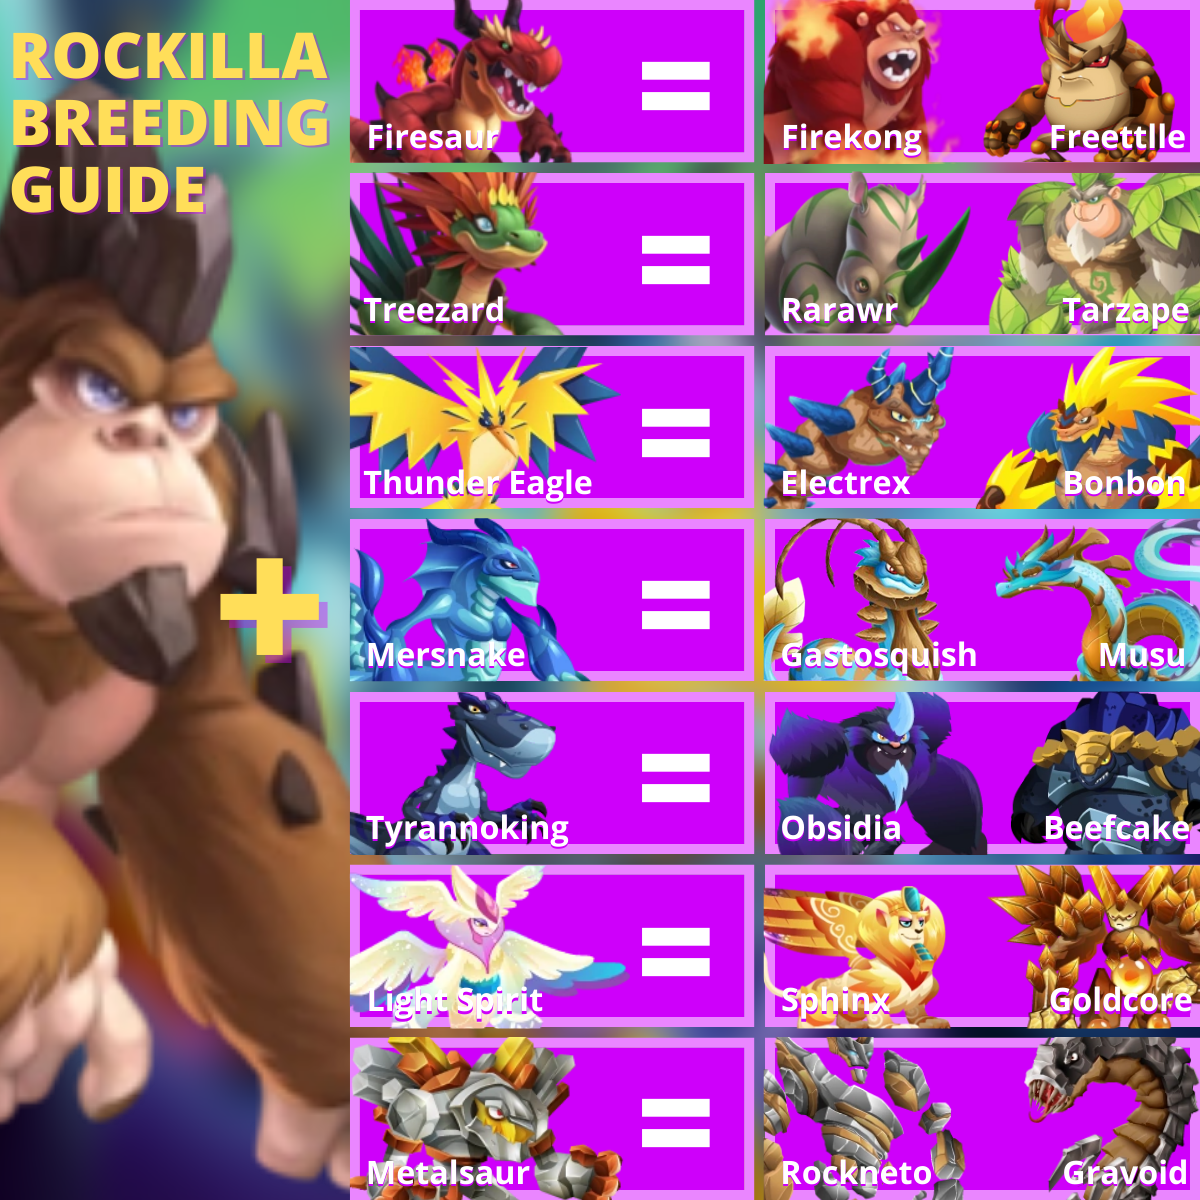 Monster Legends Breeding Guide Rockilla